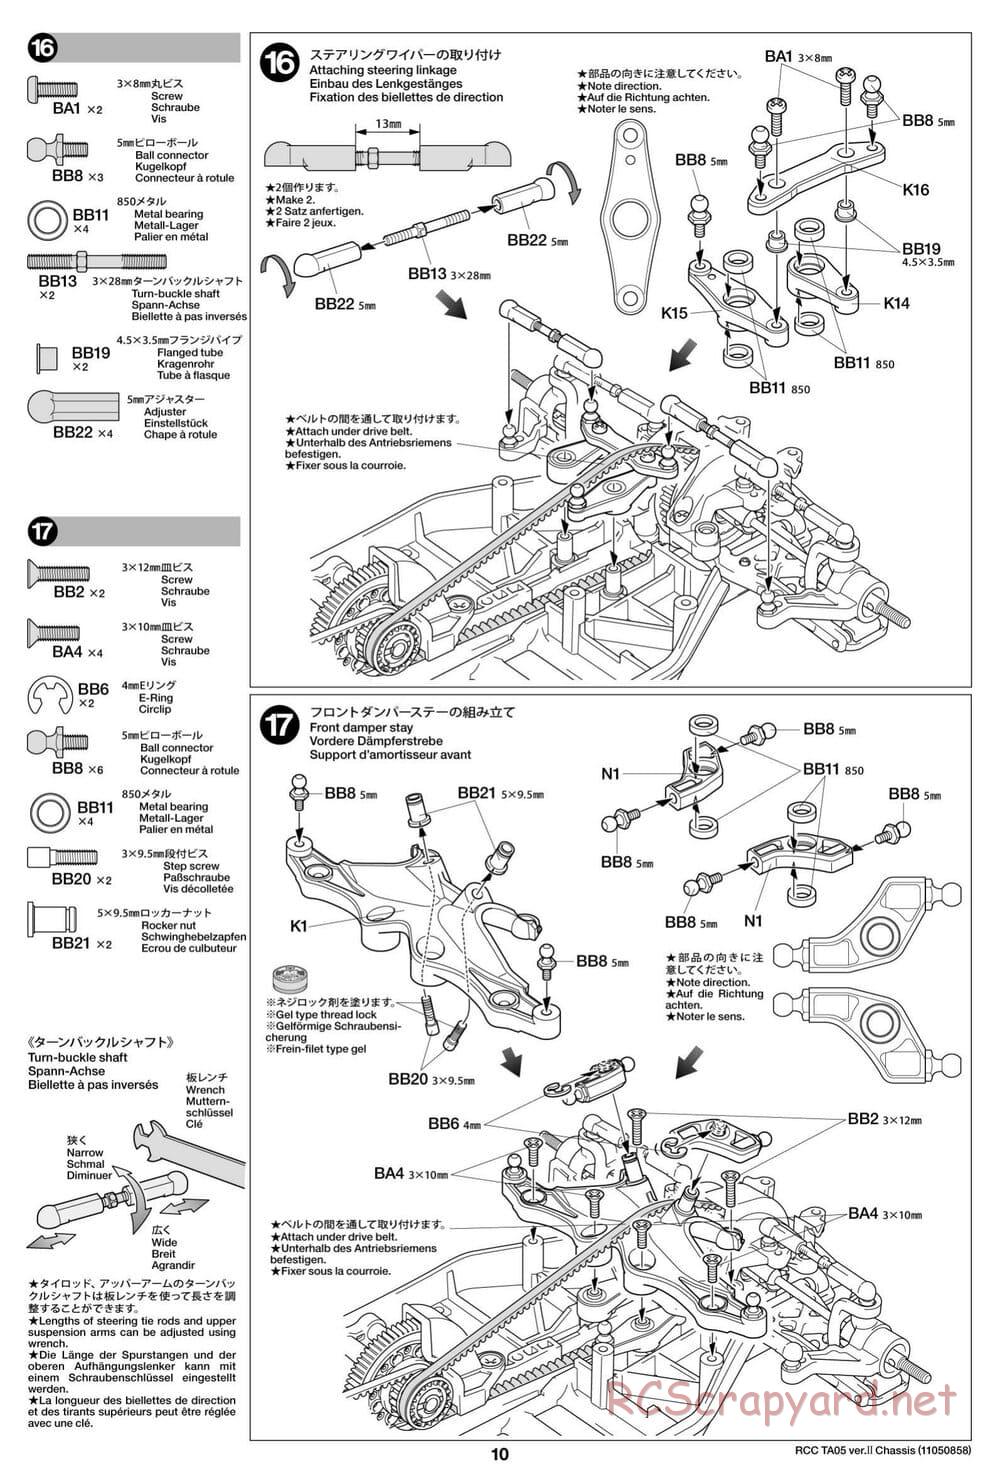 Tamiya - TA05 Ver.II Chassis - Manual - Page 10